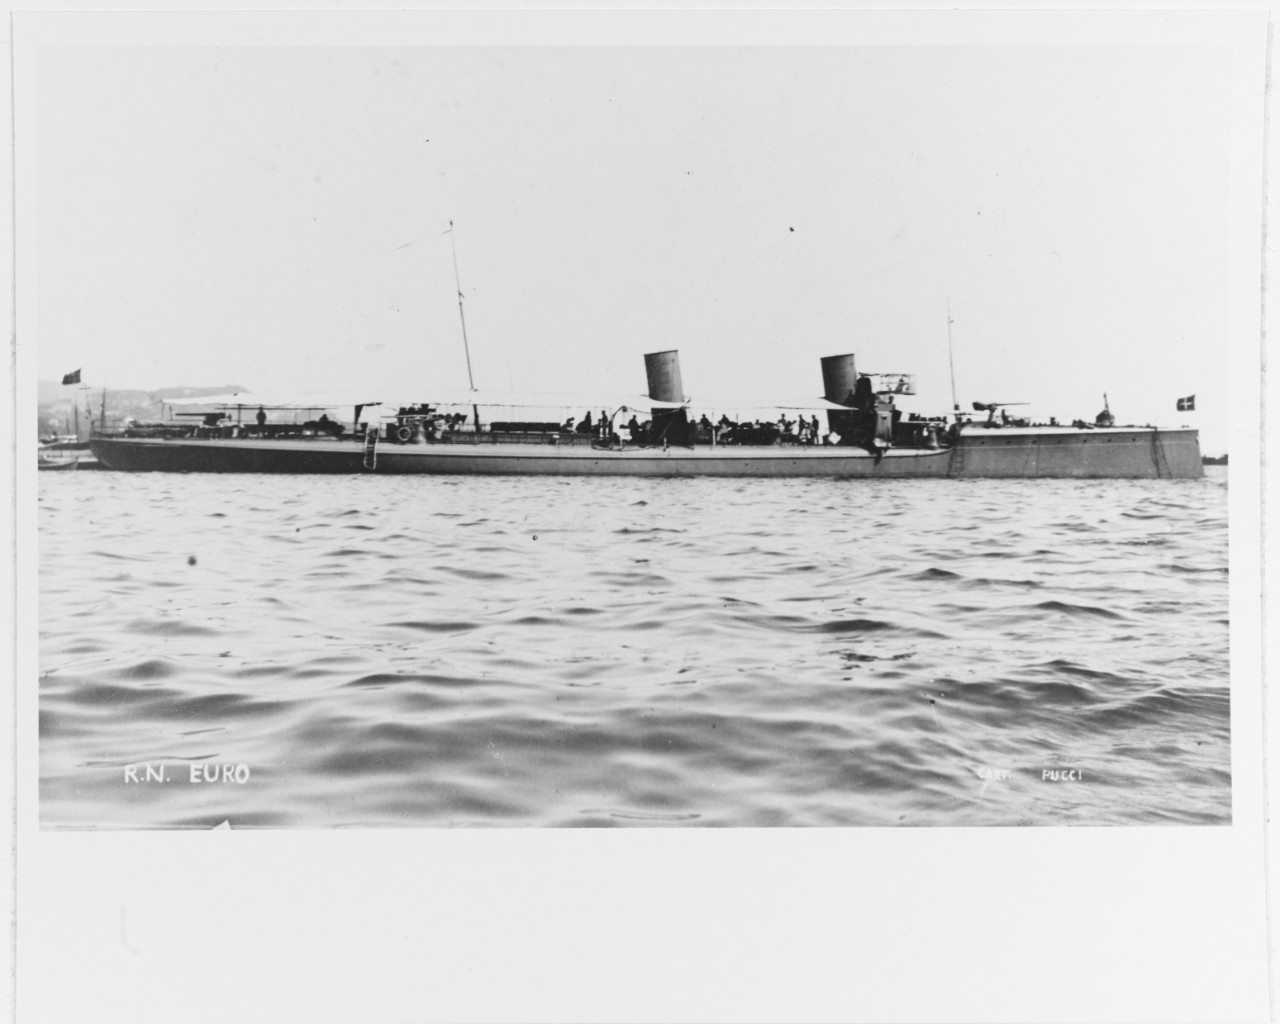 EURO (Italian Destroyer, 1900-1924)